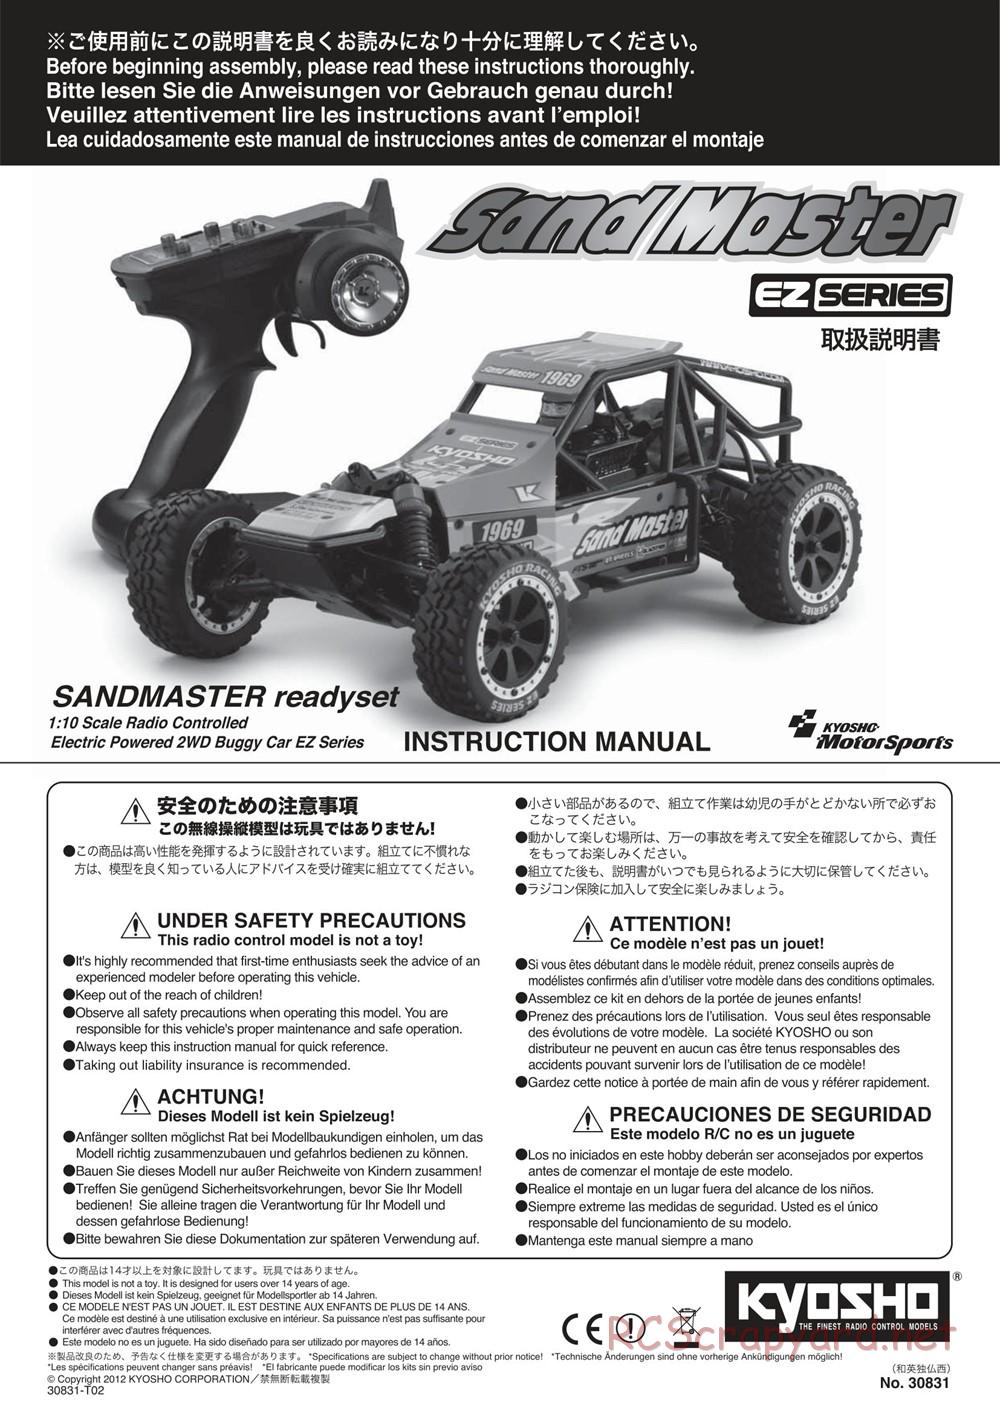 Kyosho - Sandmaster - Manual - Page 1